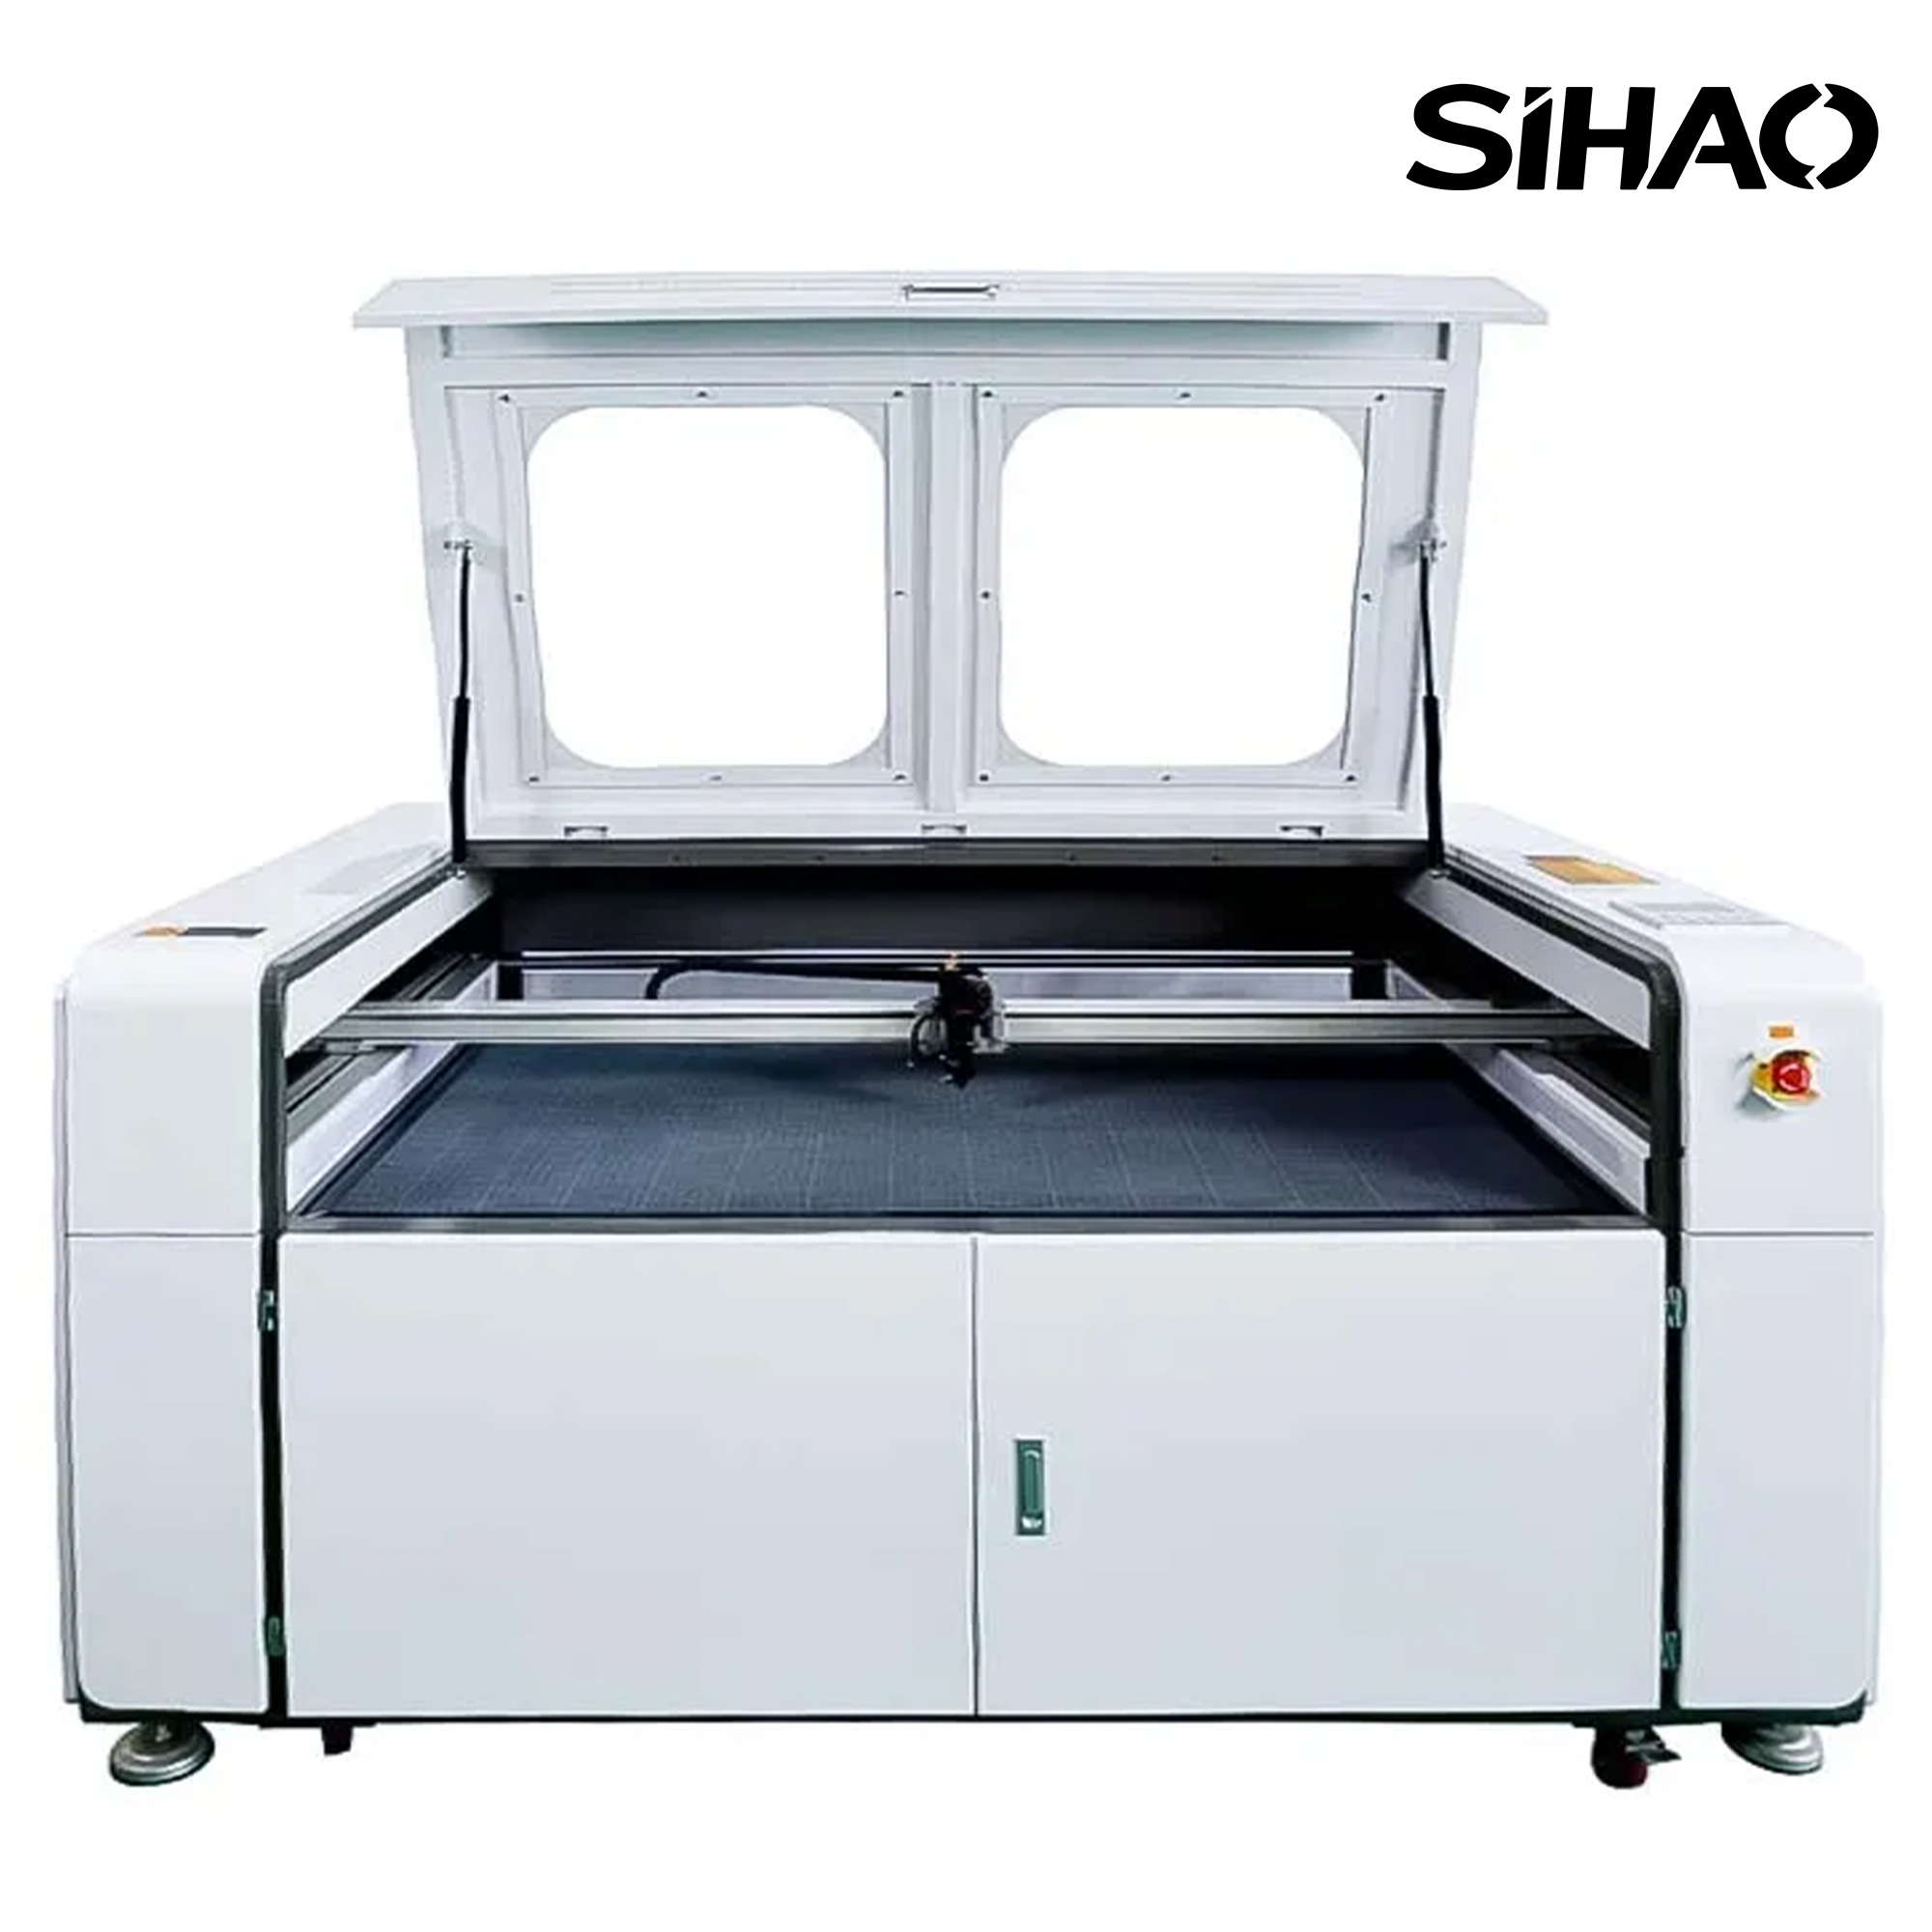 SIHAO 1400X1000MM Laser Engraving Machine